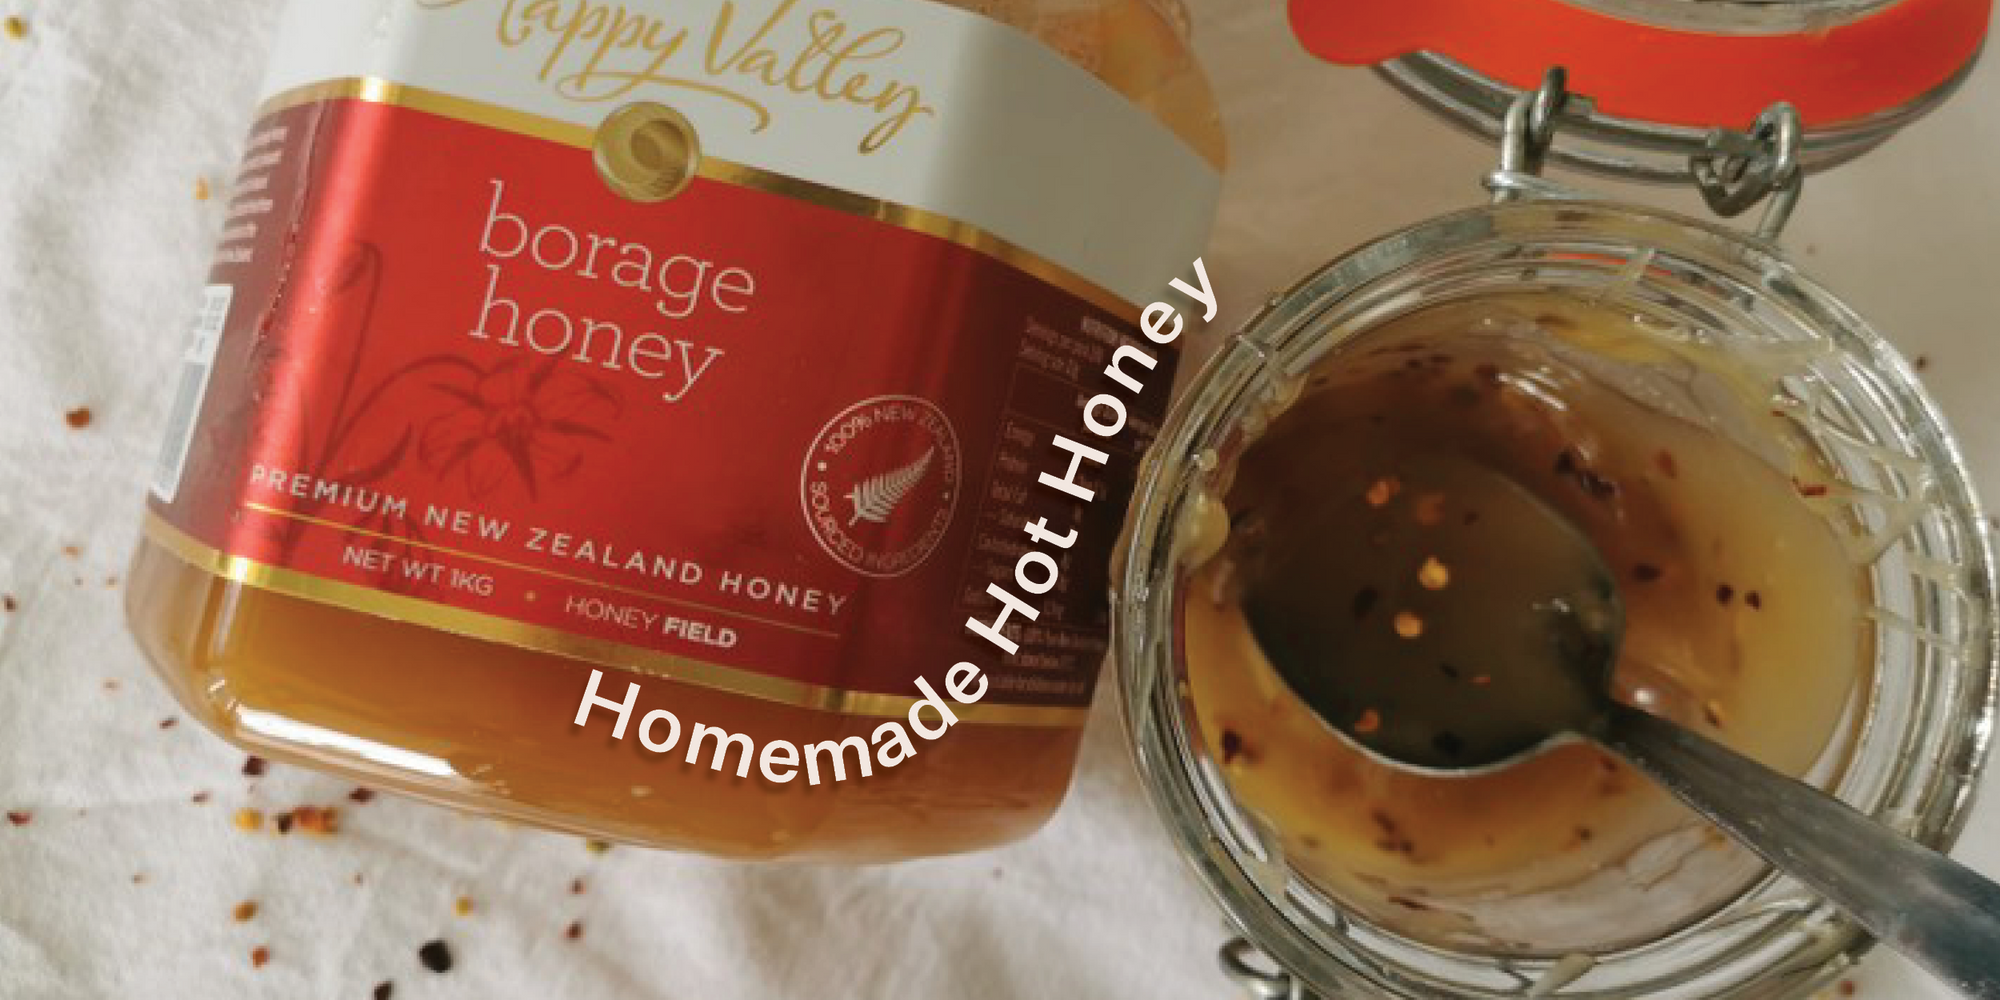 Make hot honey yourself at home